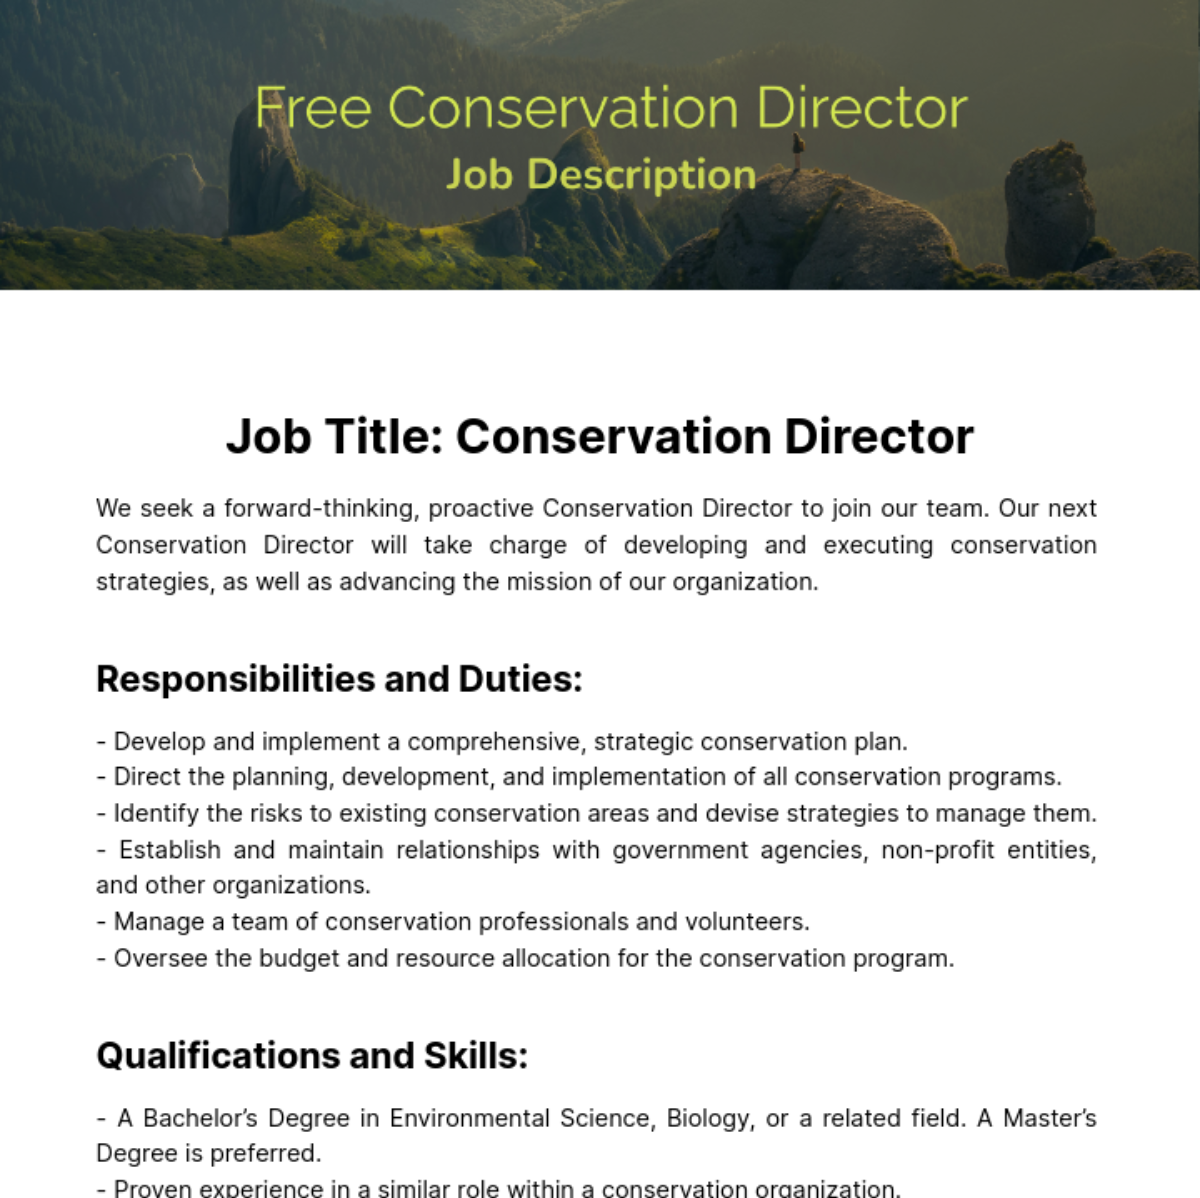 Free Conservation Director Job Description Template